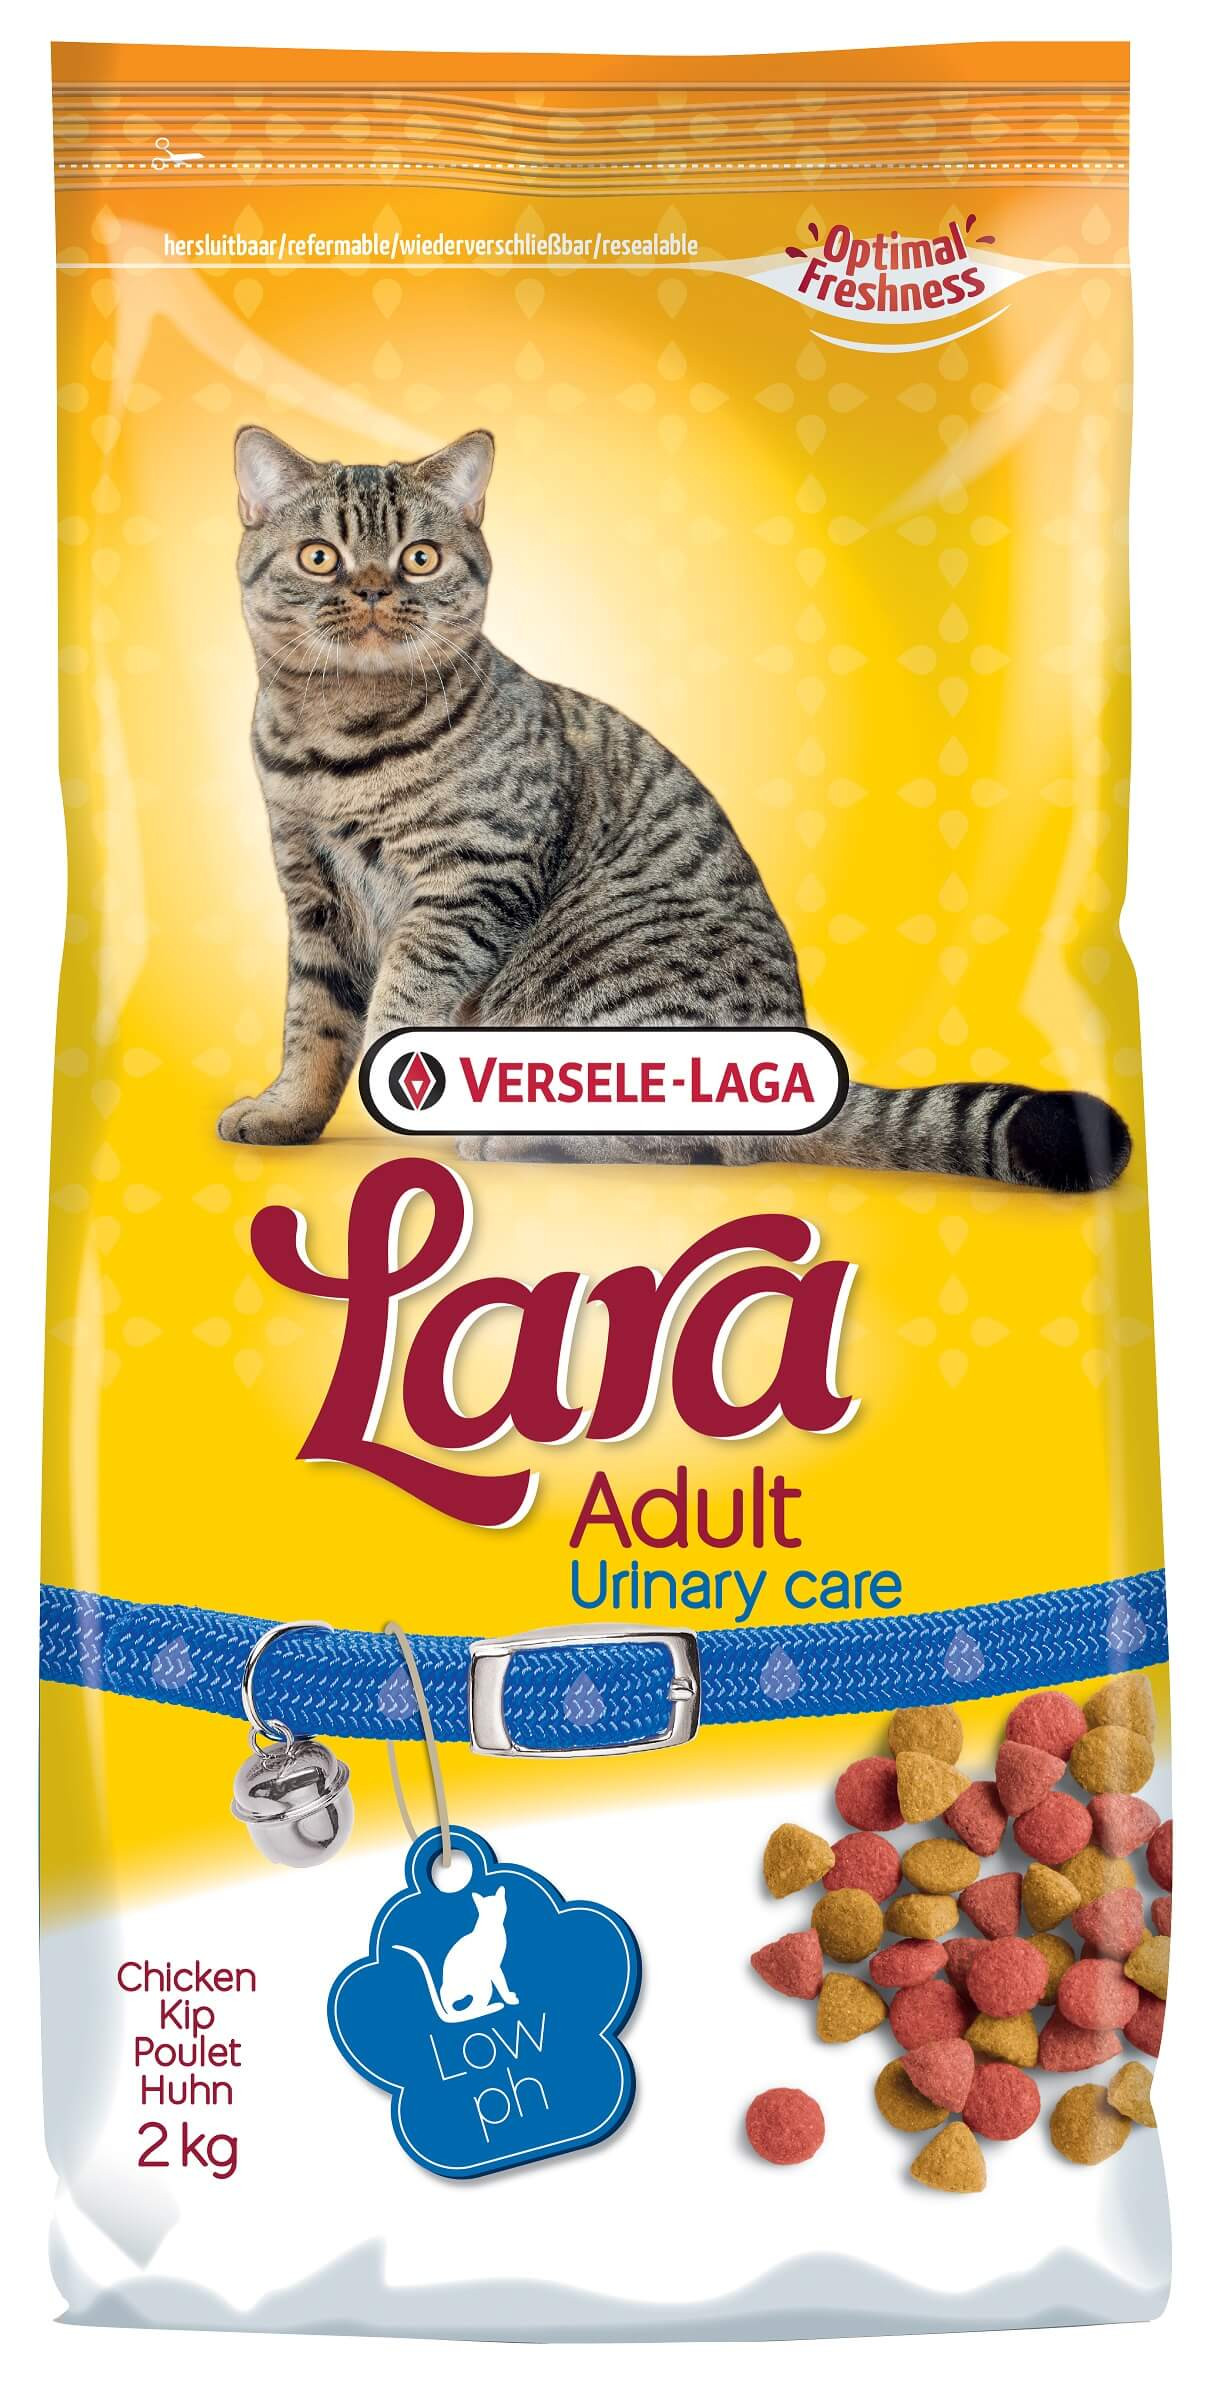 Versele-Laga Lara Adult Urinary Care pour chat